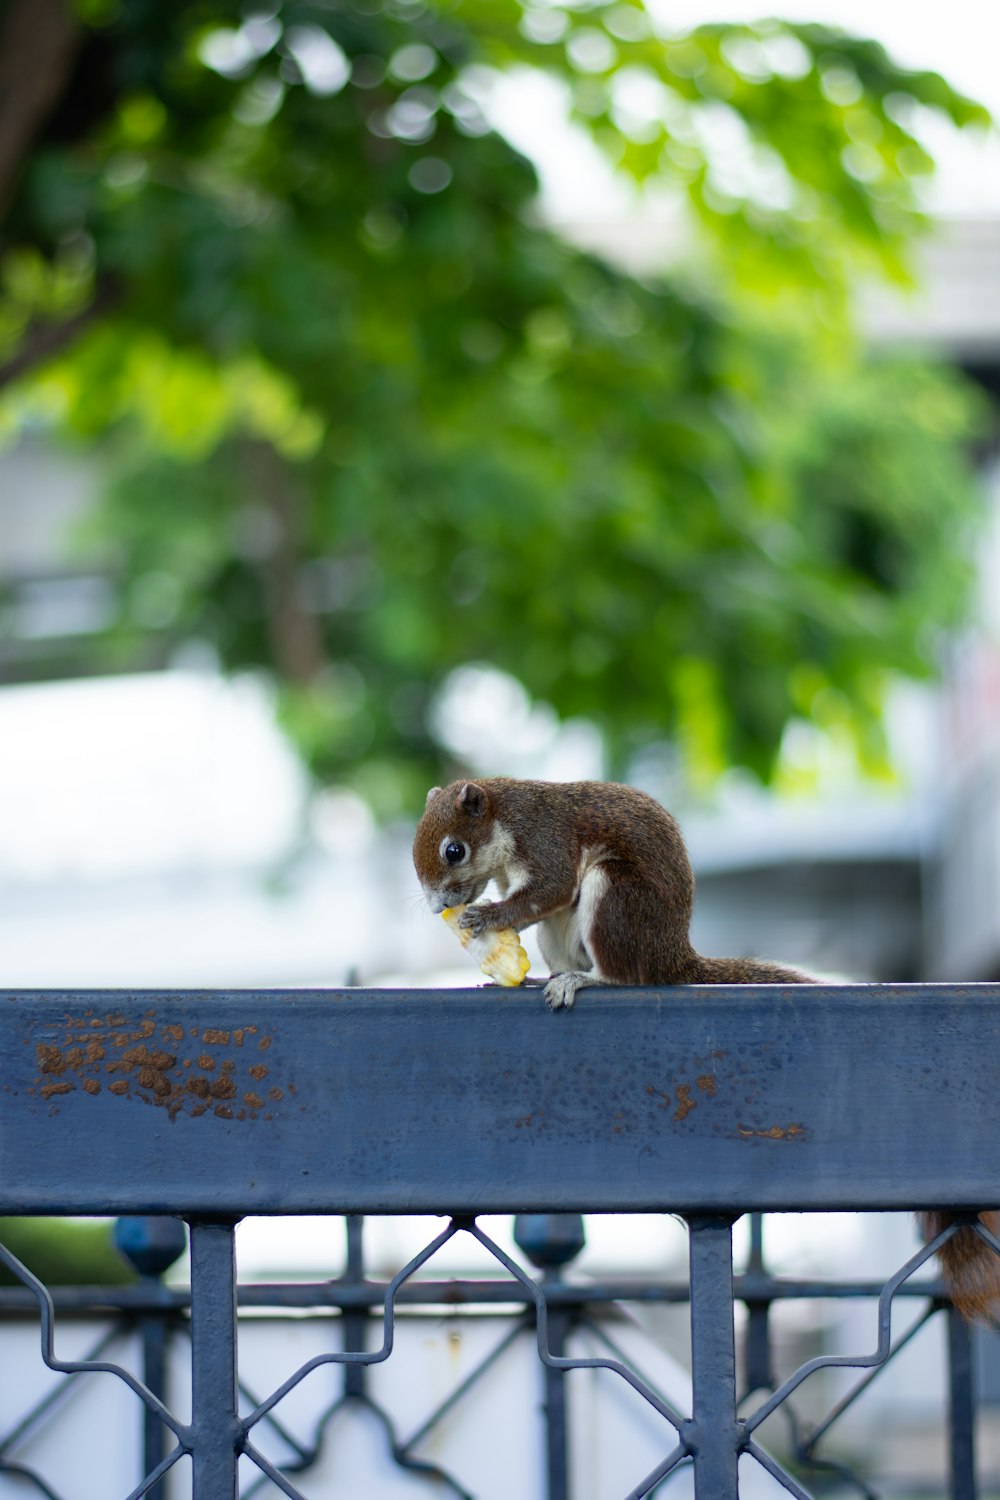 a squirrel eating a banana